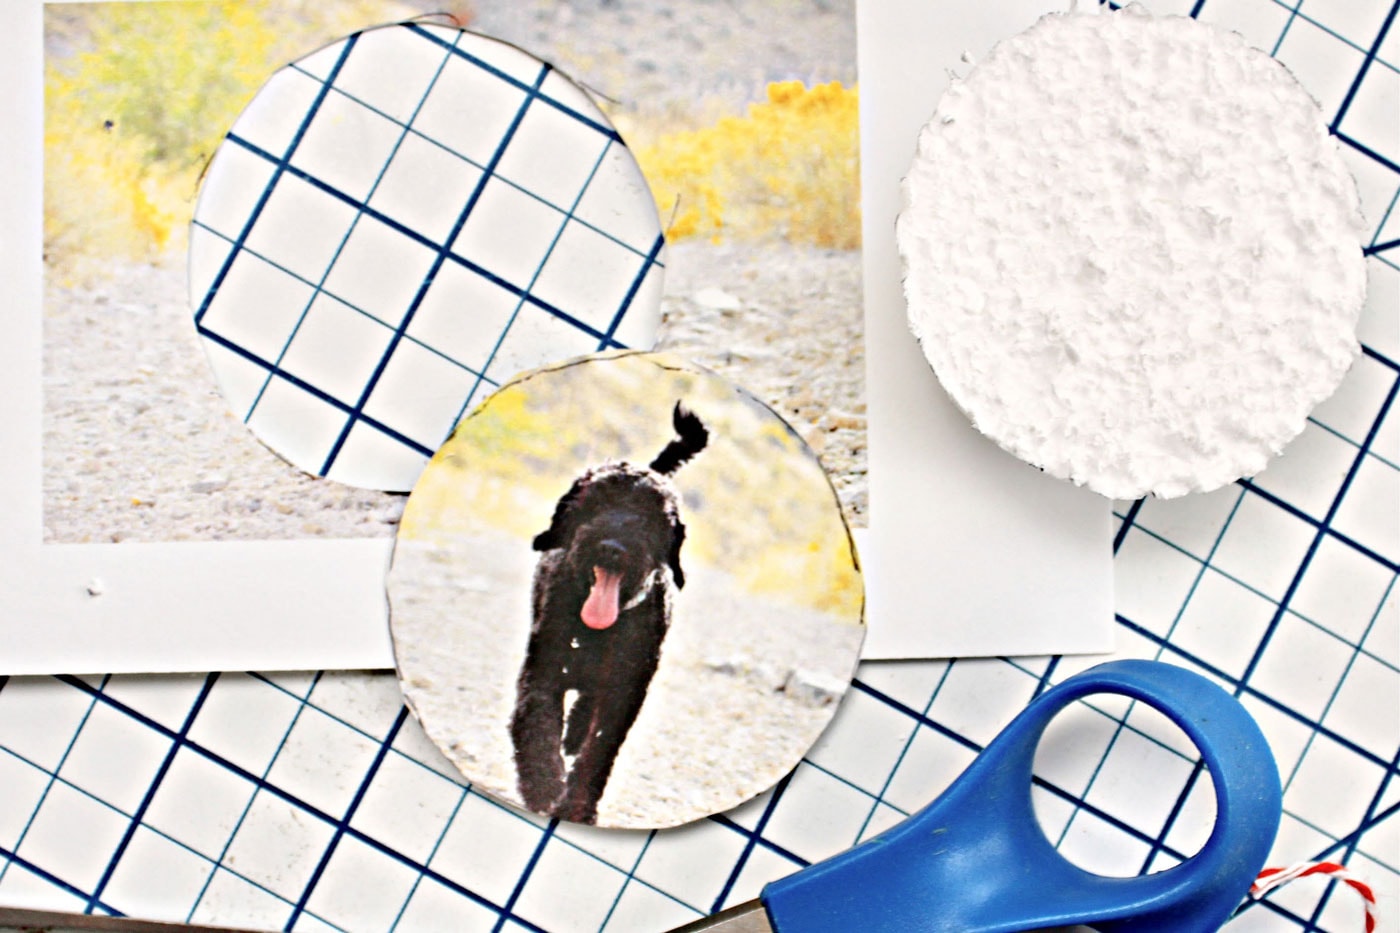 photo and styrofam ball on white cutting mat